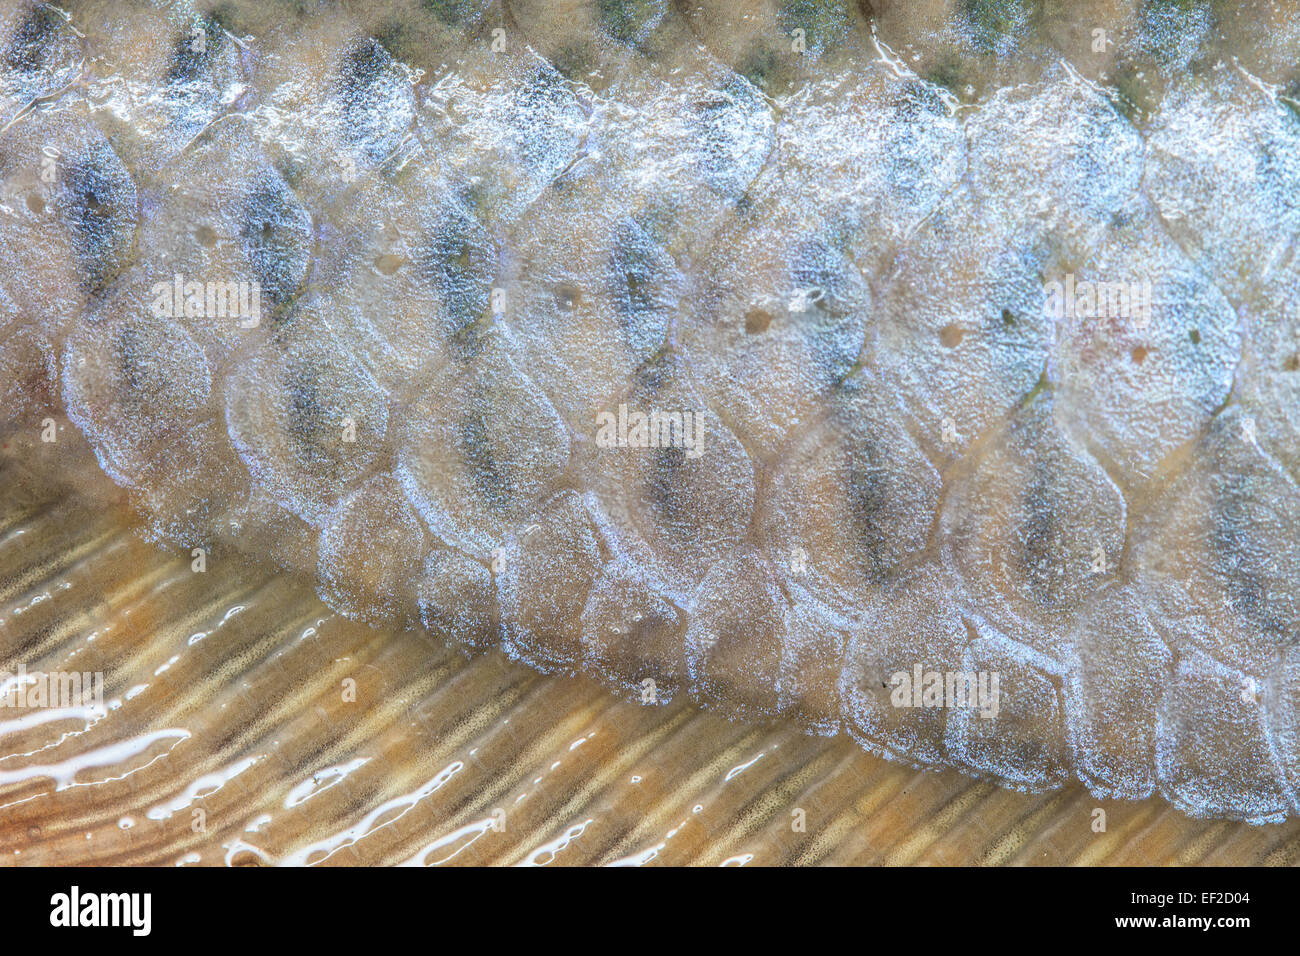 Arowana Scale, Scales of fresh water fish close up Stock Photo